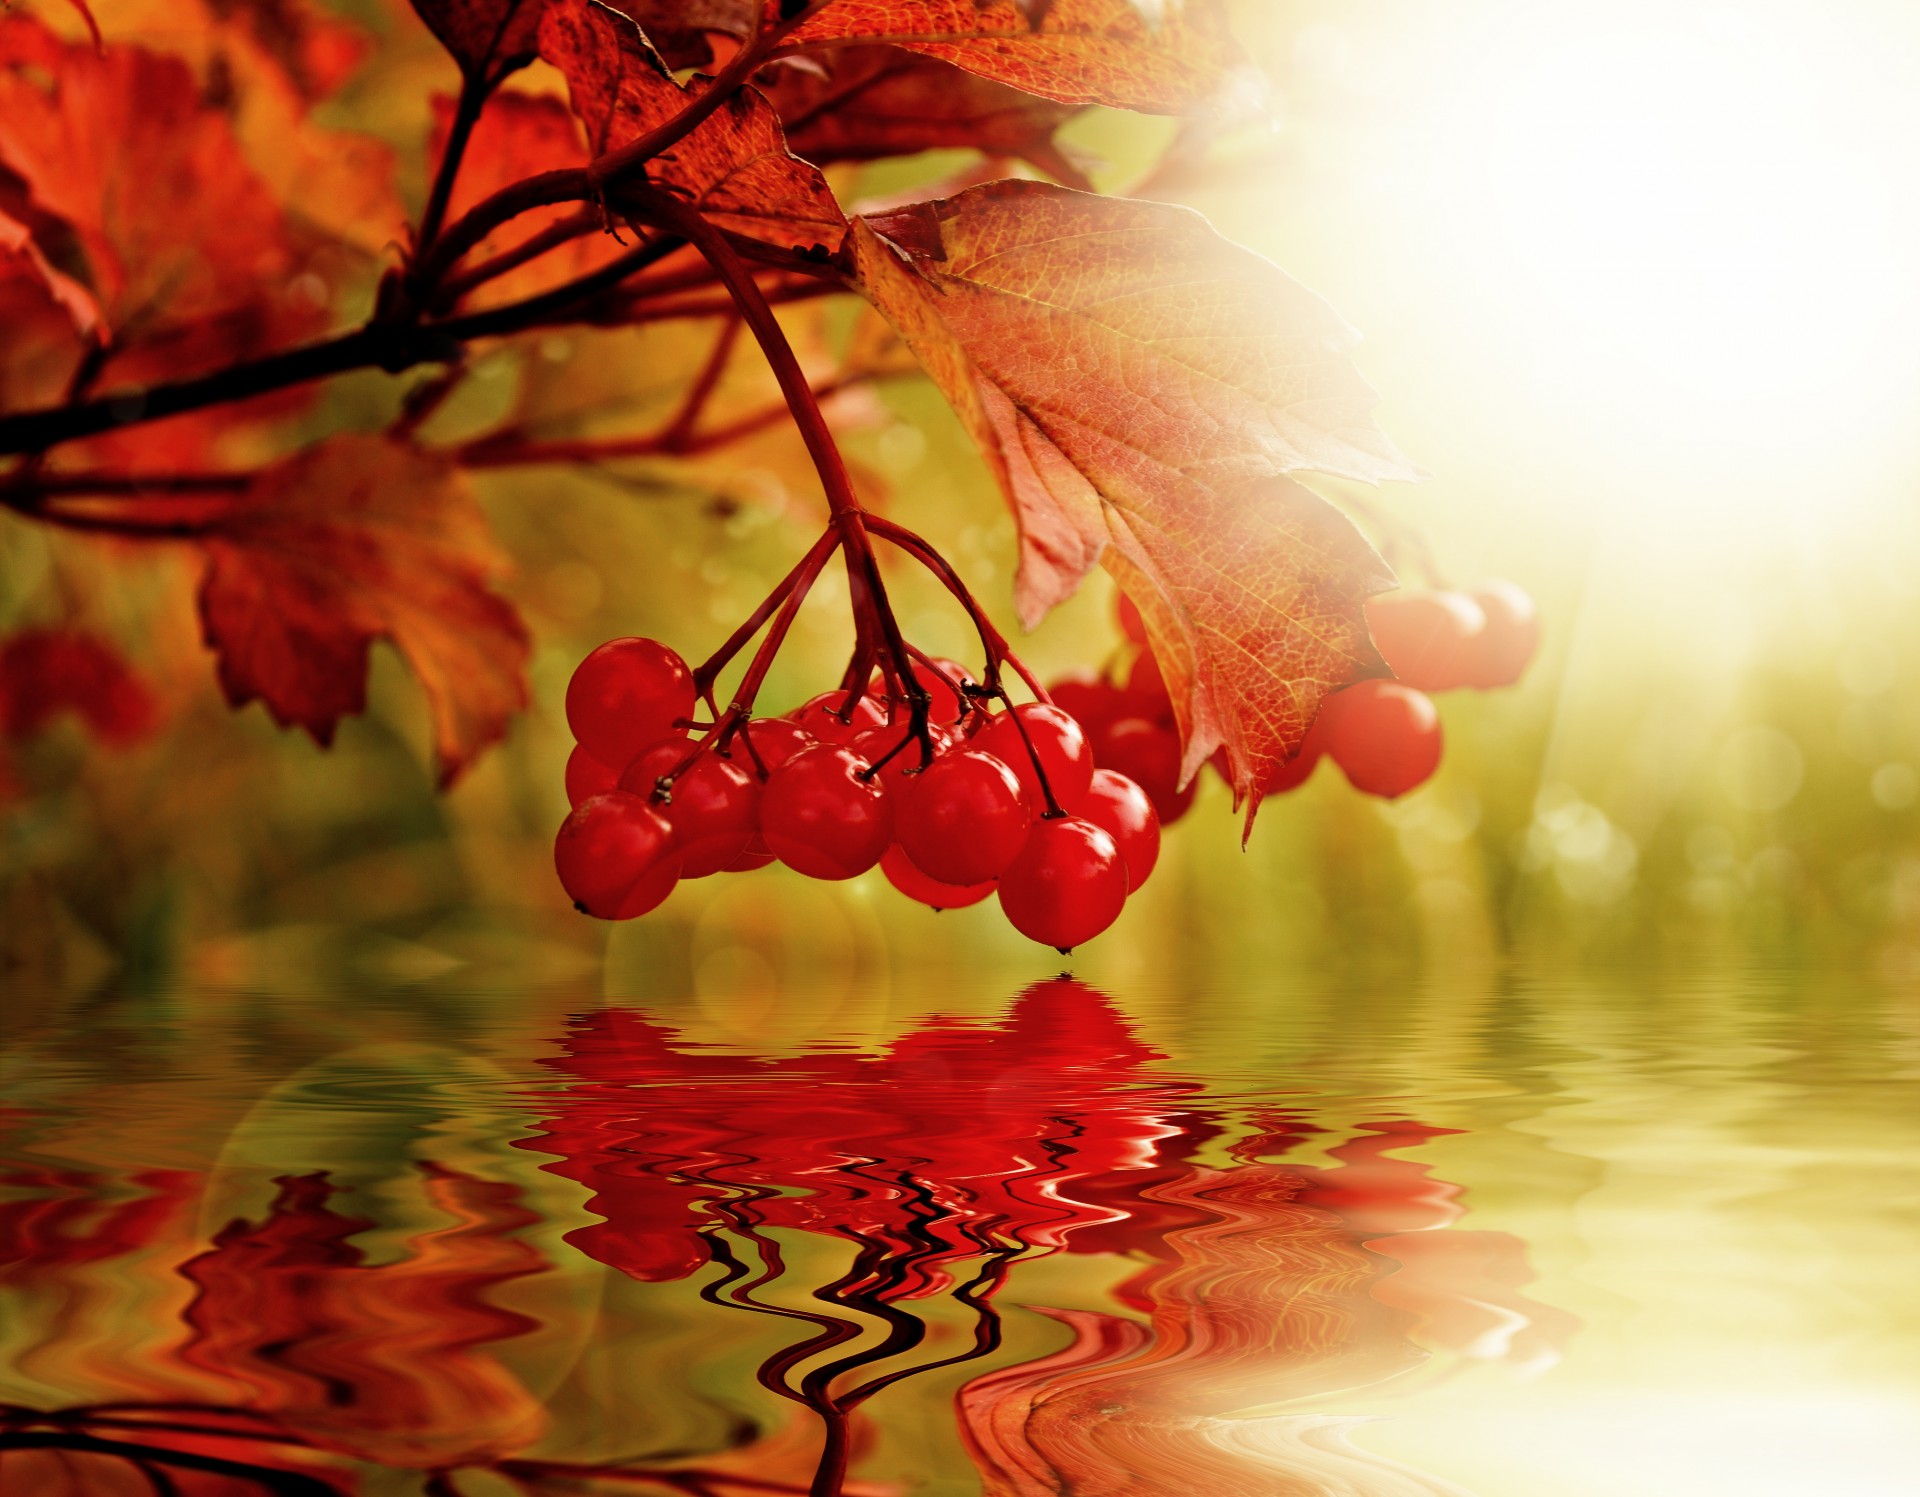 Ripe berries of Viburnum, reflection in water